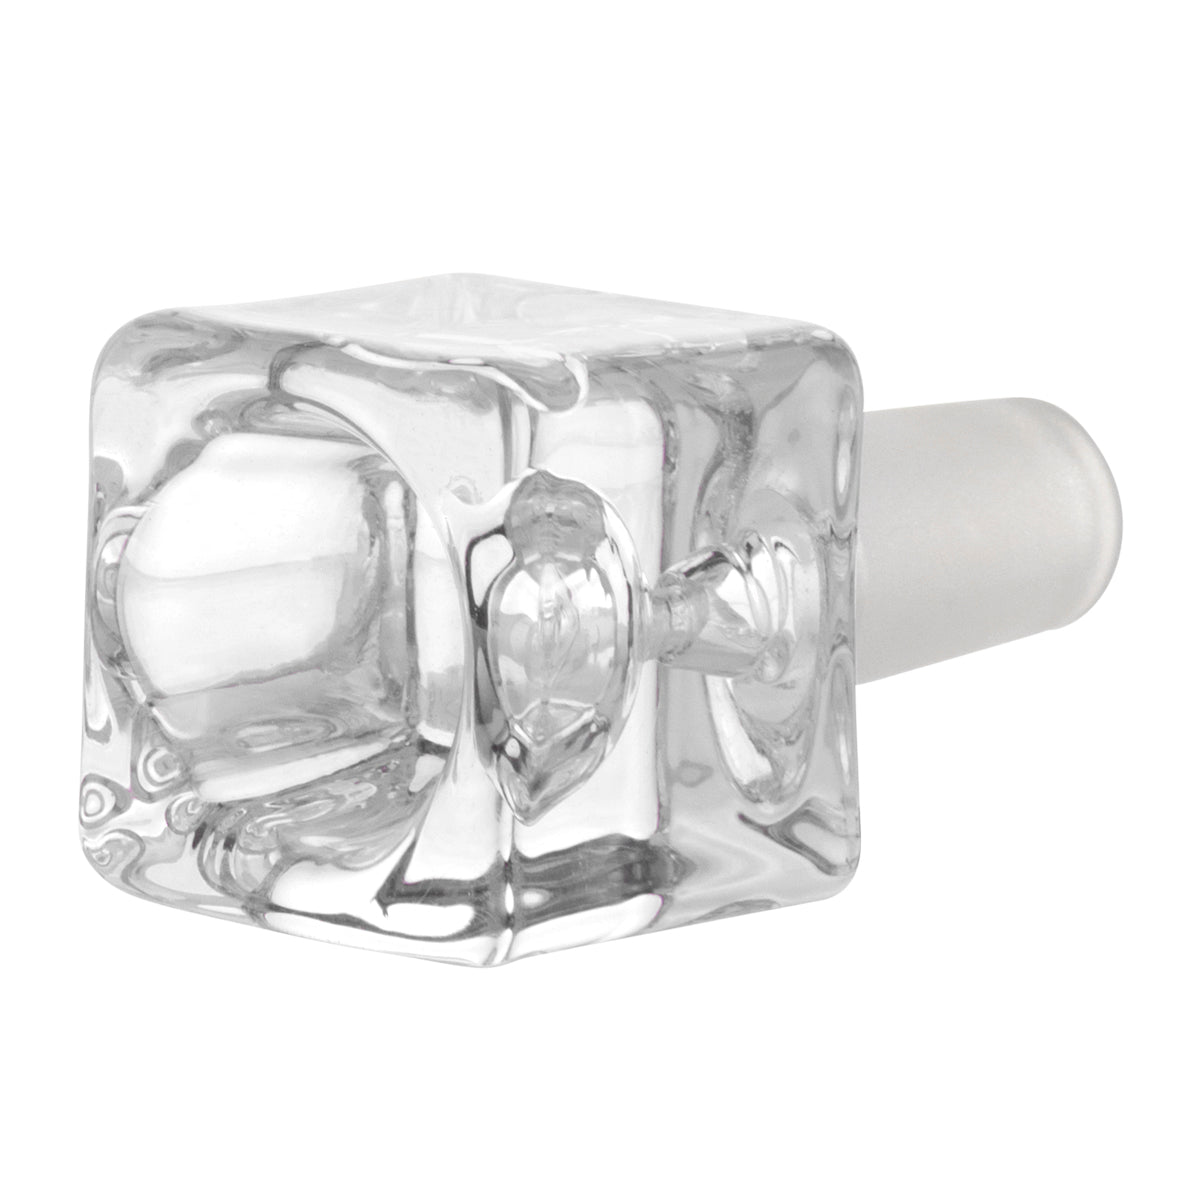 Bowl | Cube Bowl | 14mm - Clear Glass Bowl Biohazard Inc   